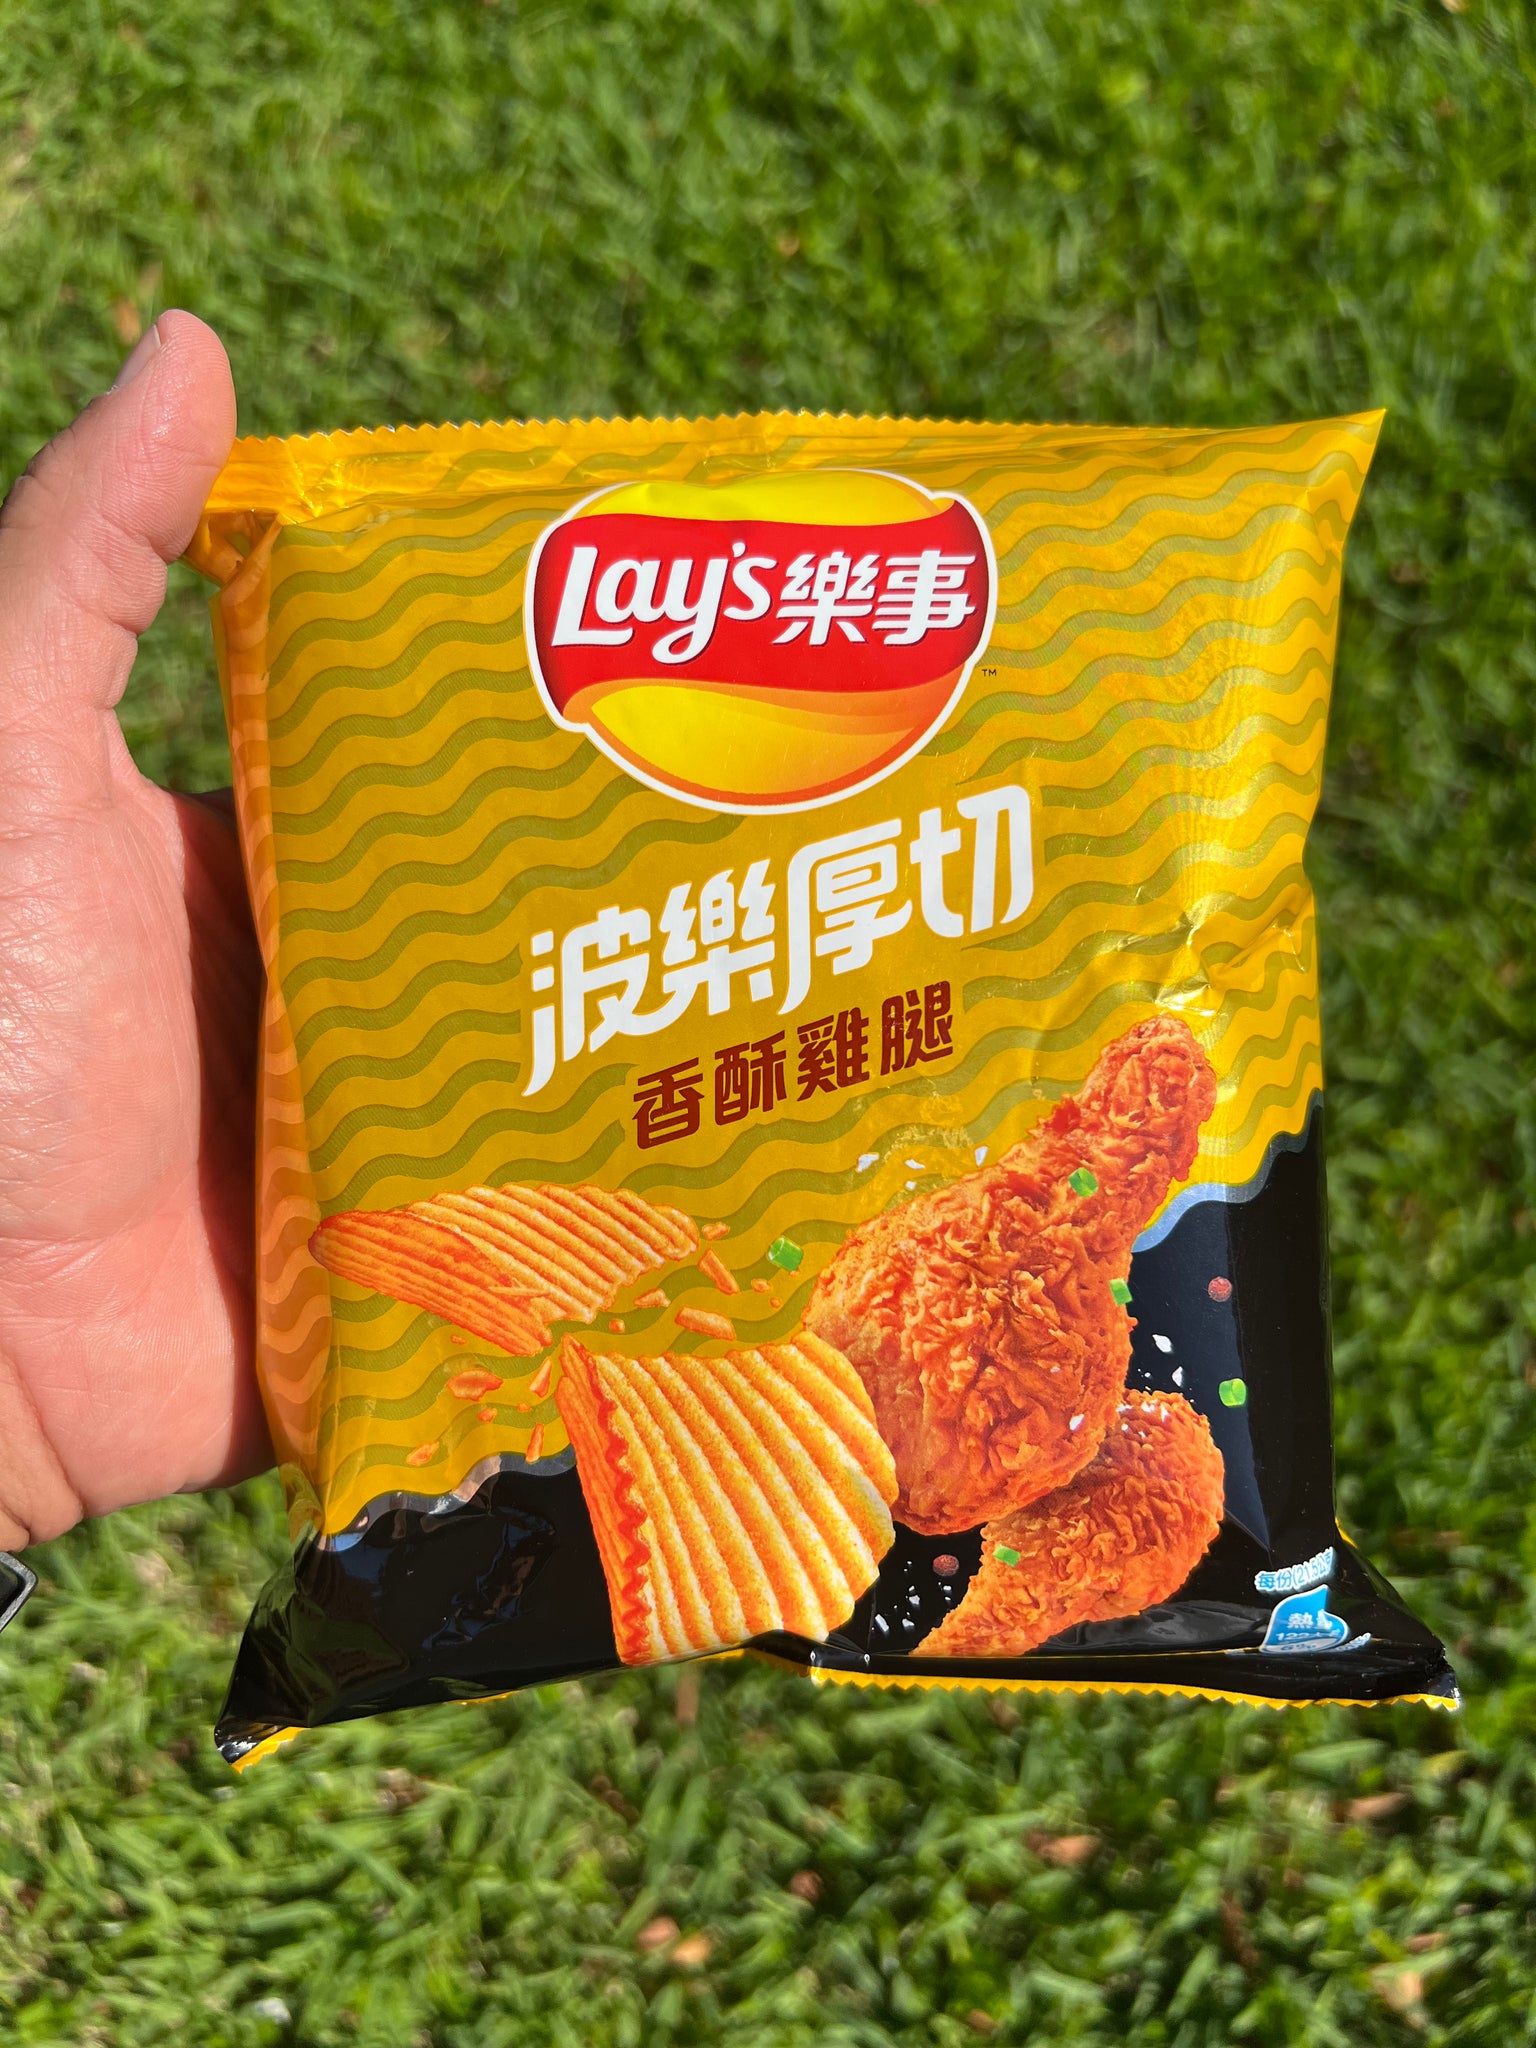 Lay's Crispy Fried Chicken (Taiwan)